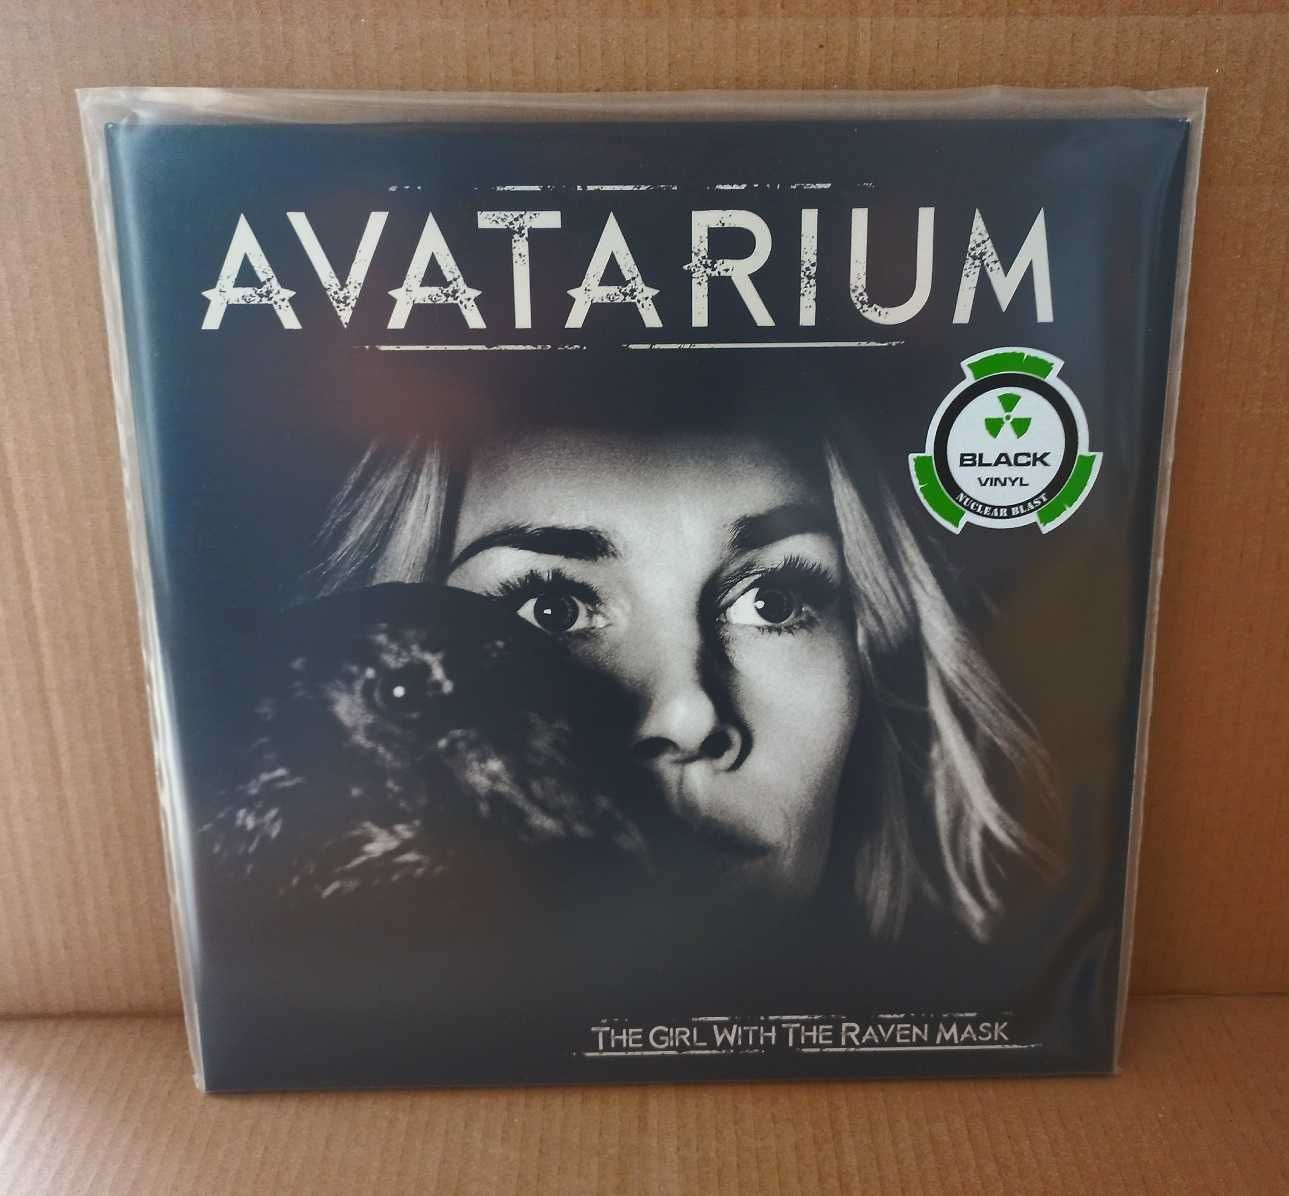 AVATARIUM - The Girl With The Raven Mask (2 x Black Vinyls)